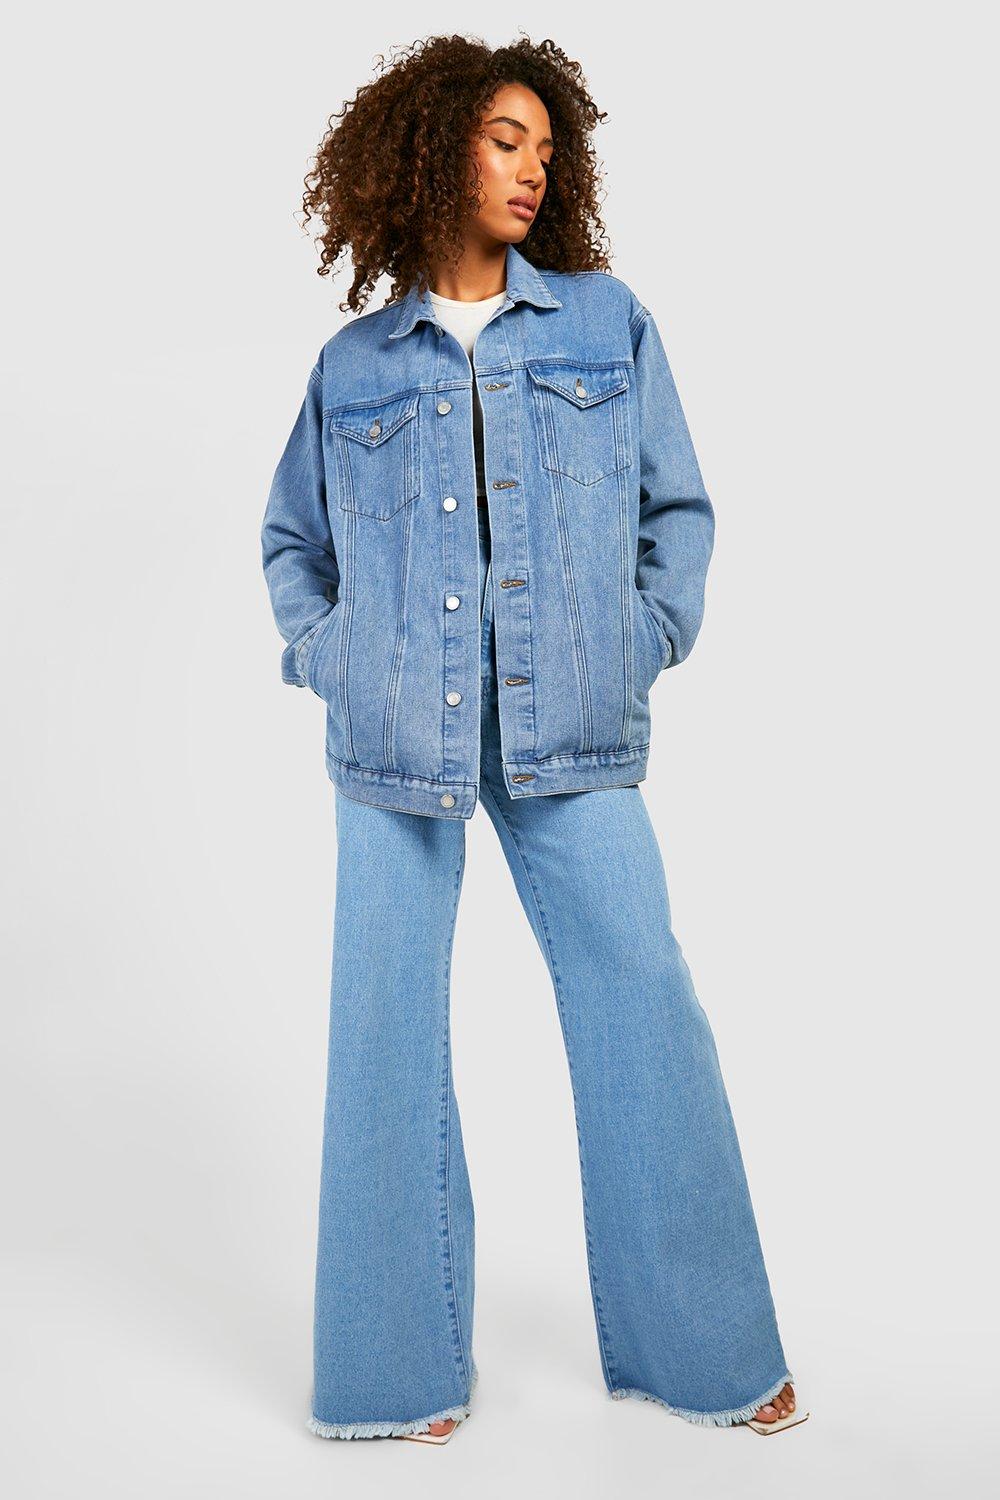 Tall Women's Denim Jacket in Vintage Medium Blue L / Extra Tall / Vintage Medium Blue